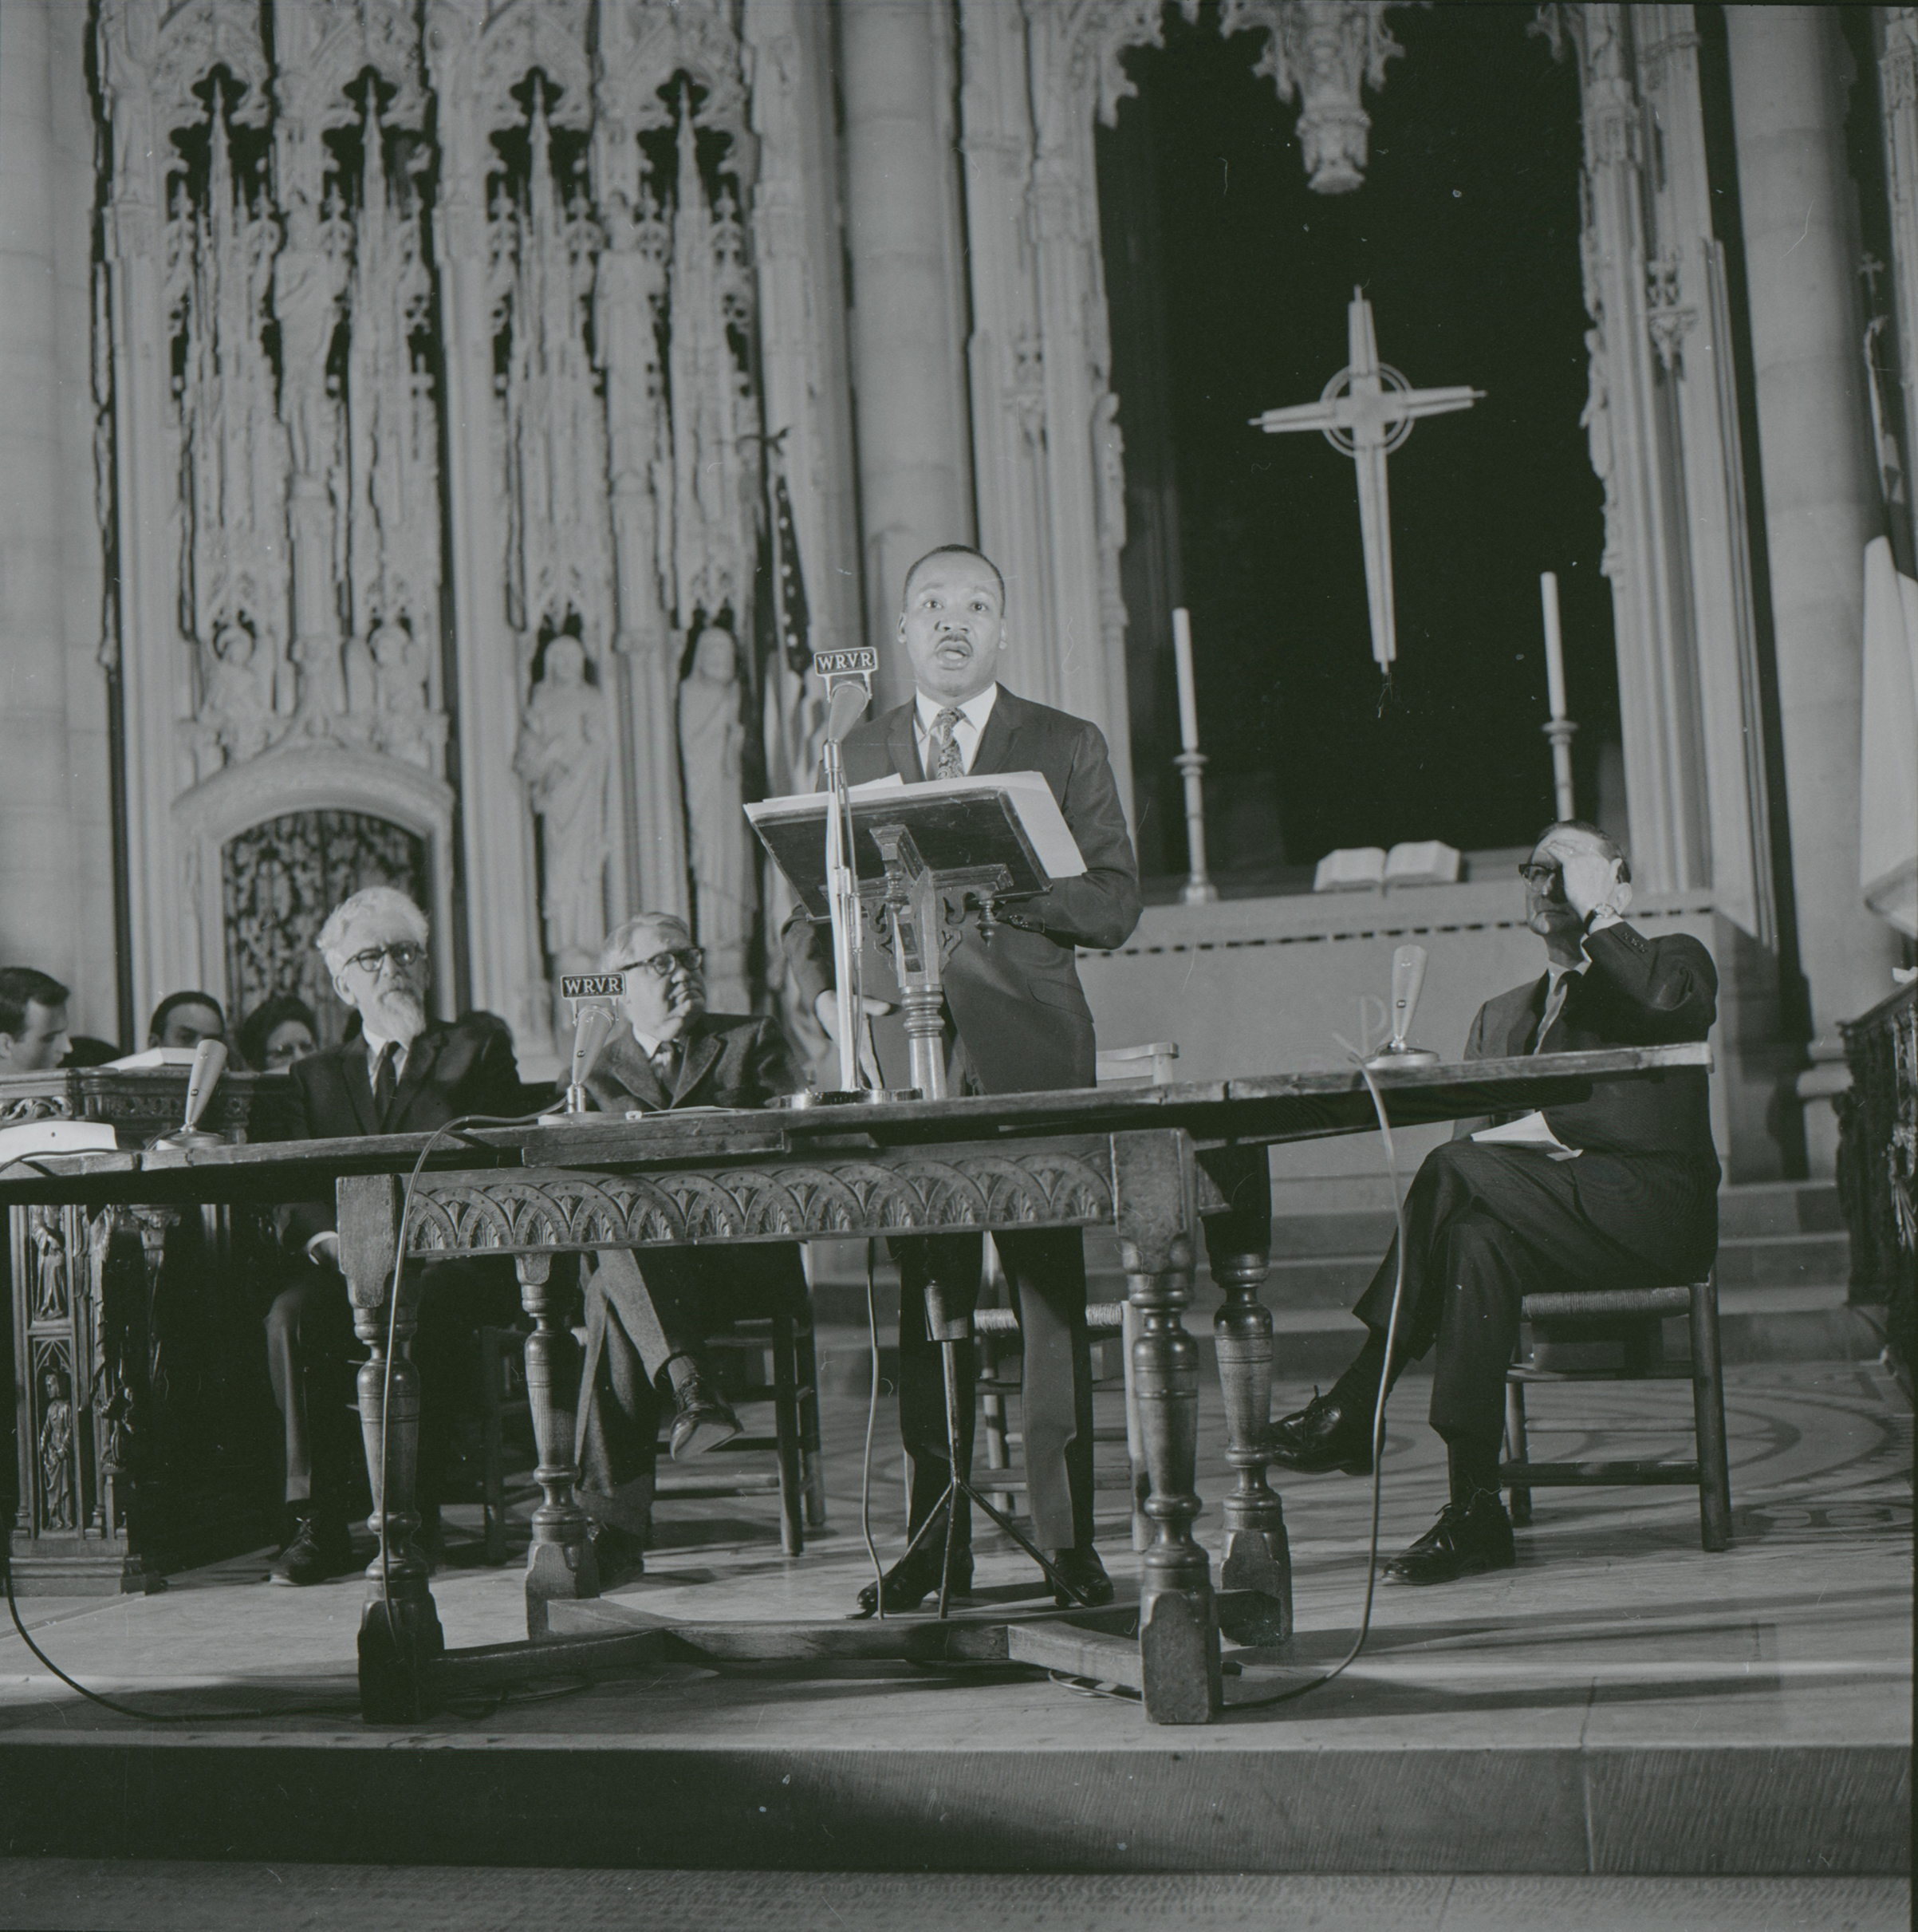 King delivering his speech “Beyond Vietnam” at New York City’s Riverside Church in 1967 (John C. Goodwin)